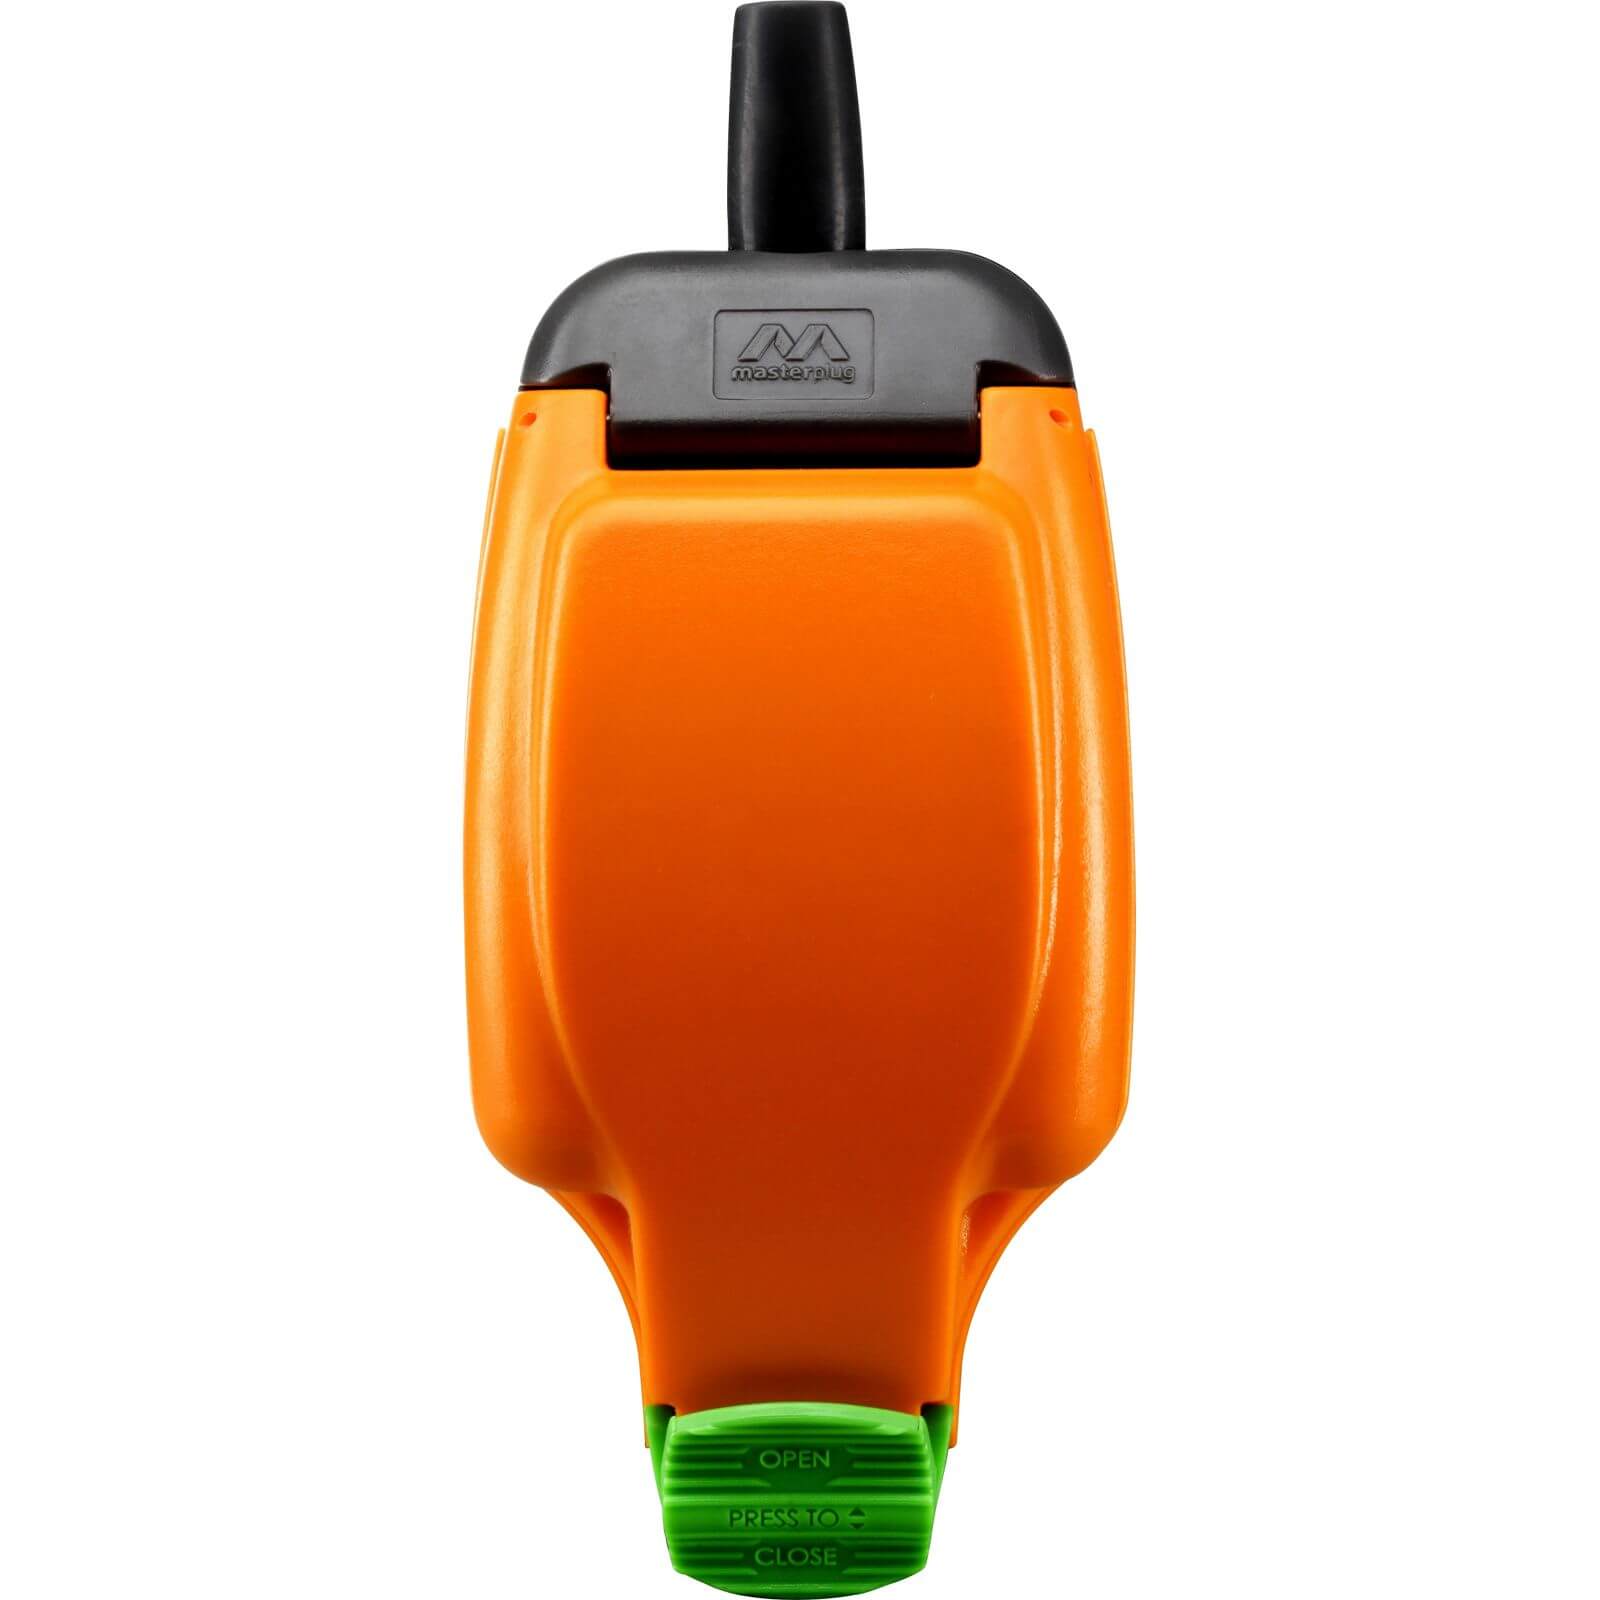 Photo of Masterplug Rewirable Ip Rated Socket Orange